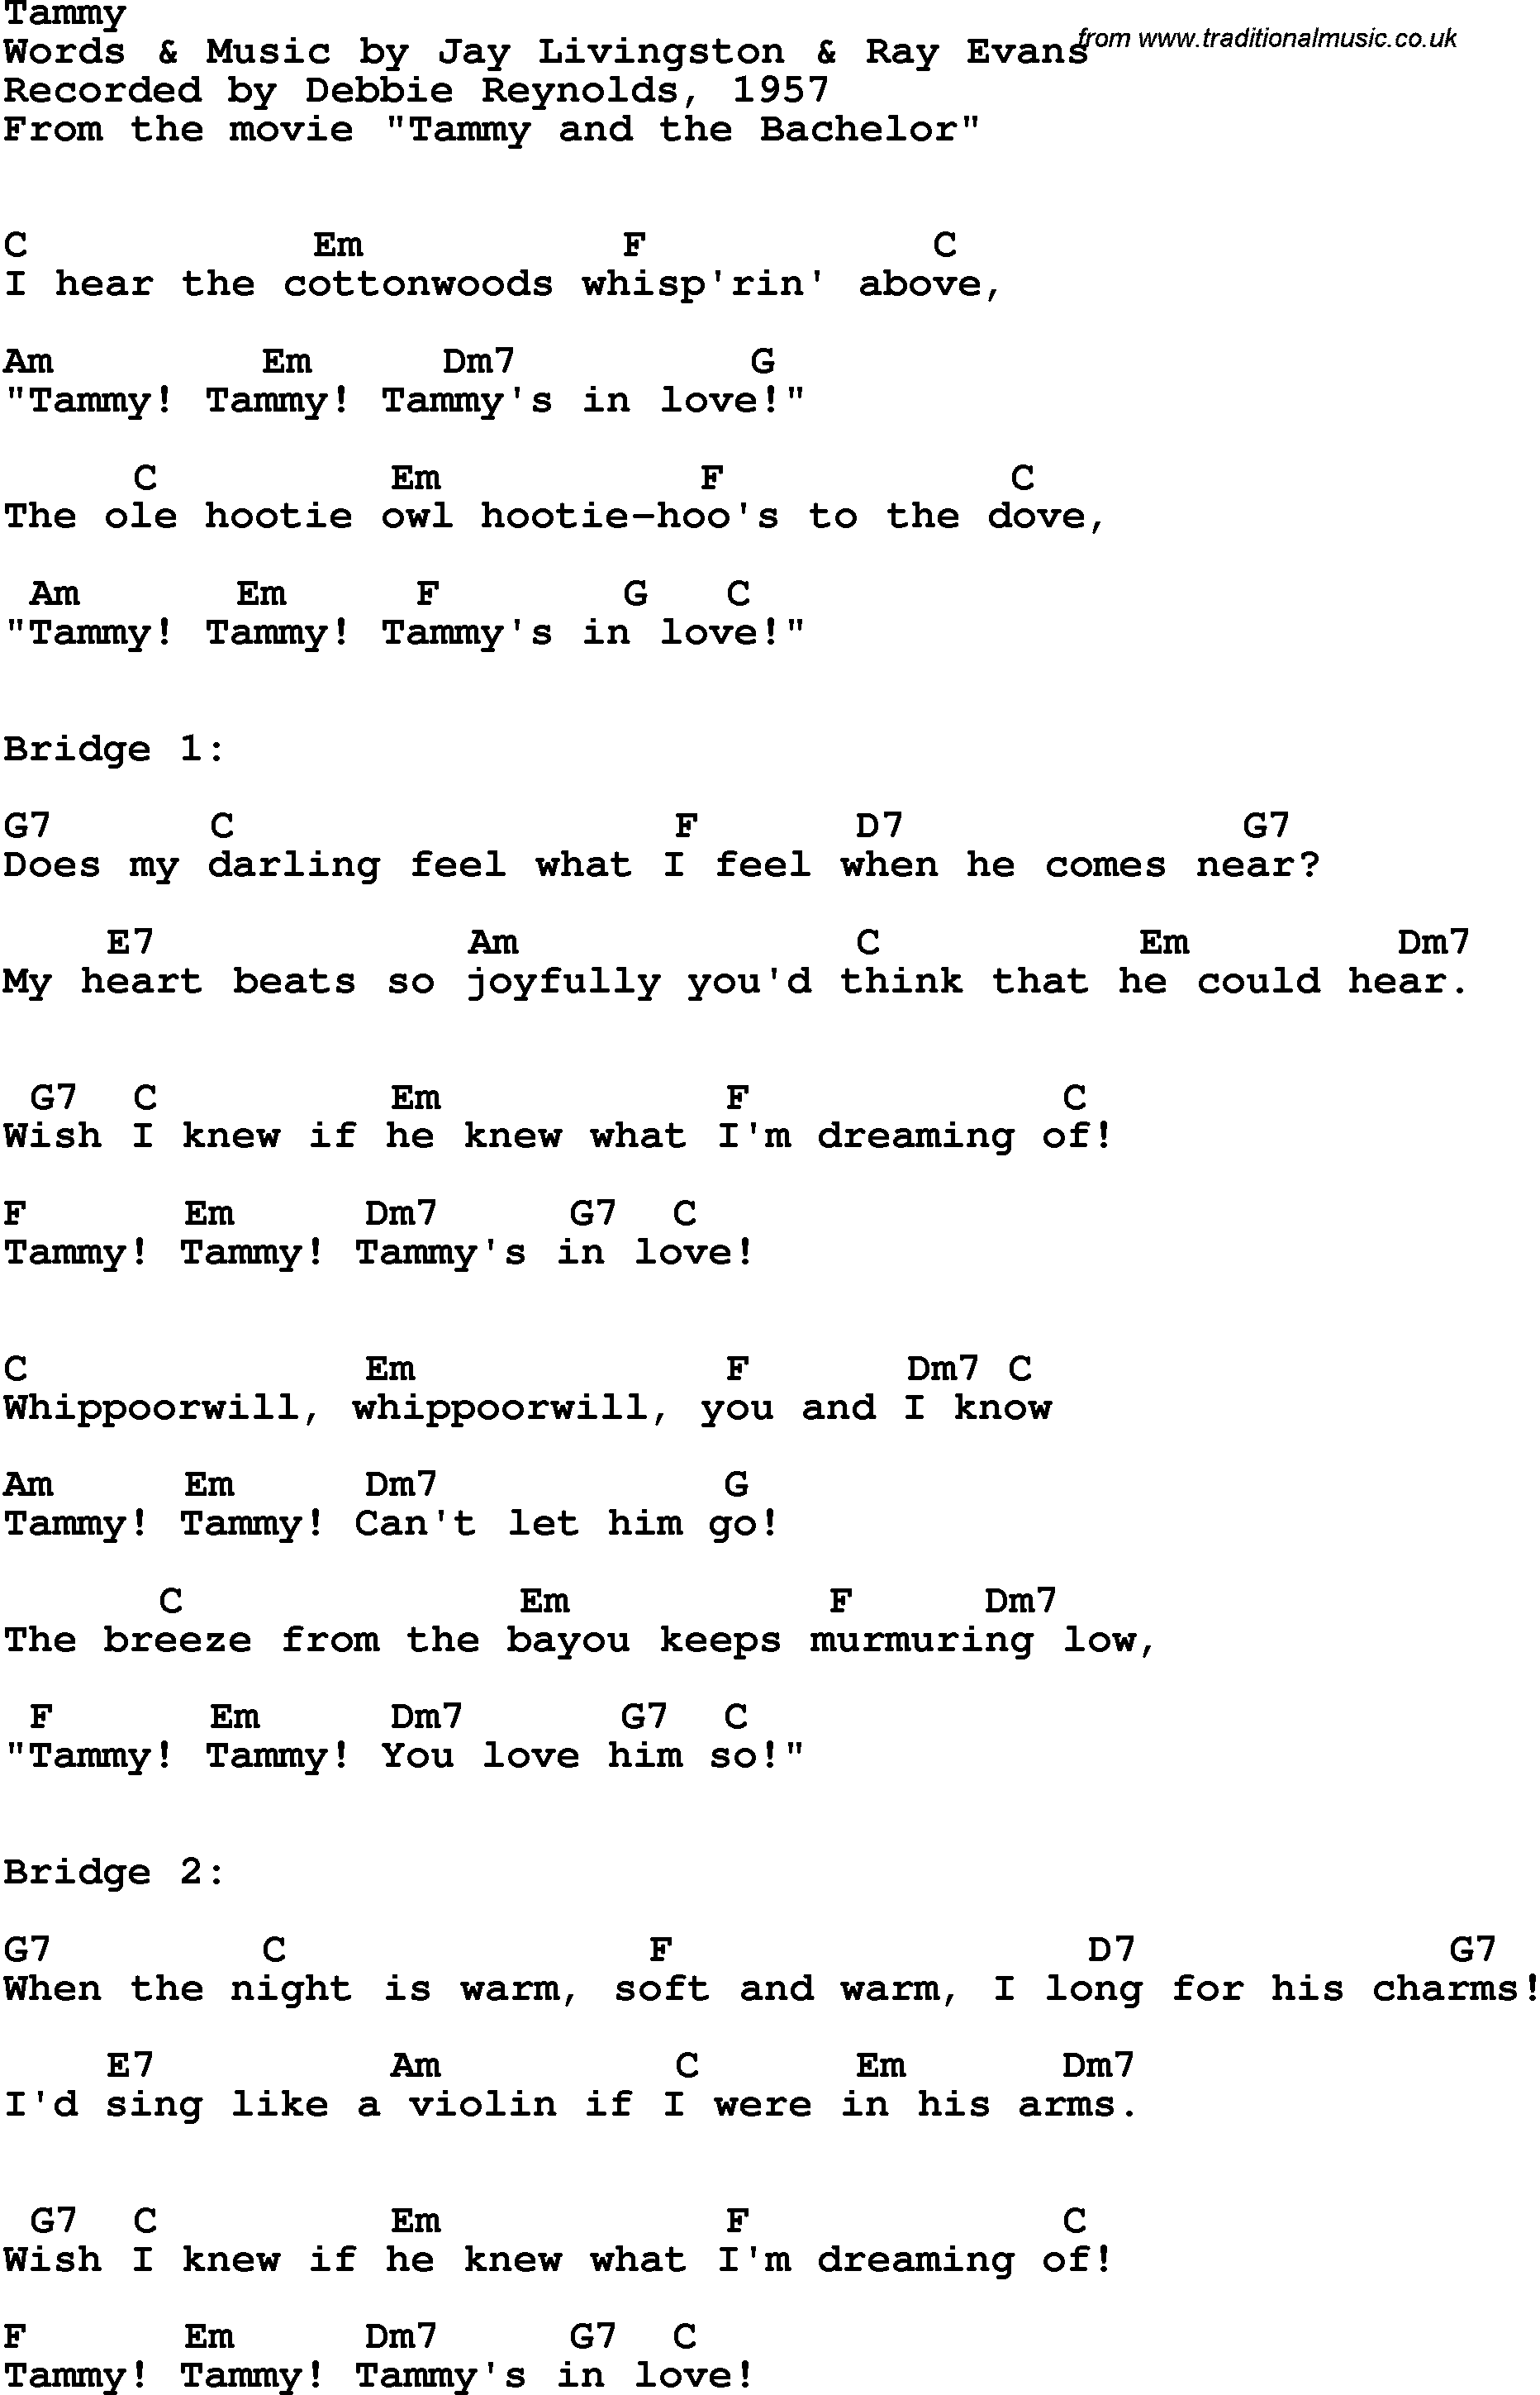 Song Lyrics with guitar chords for Tammy - Debbie Reynolds, 1957